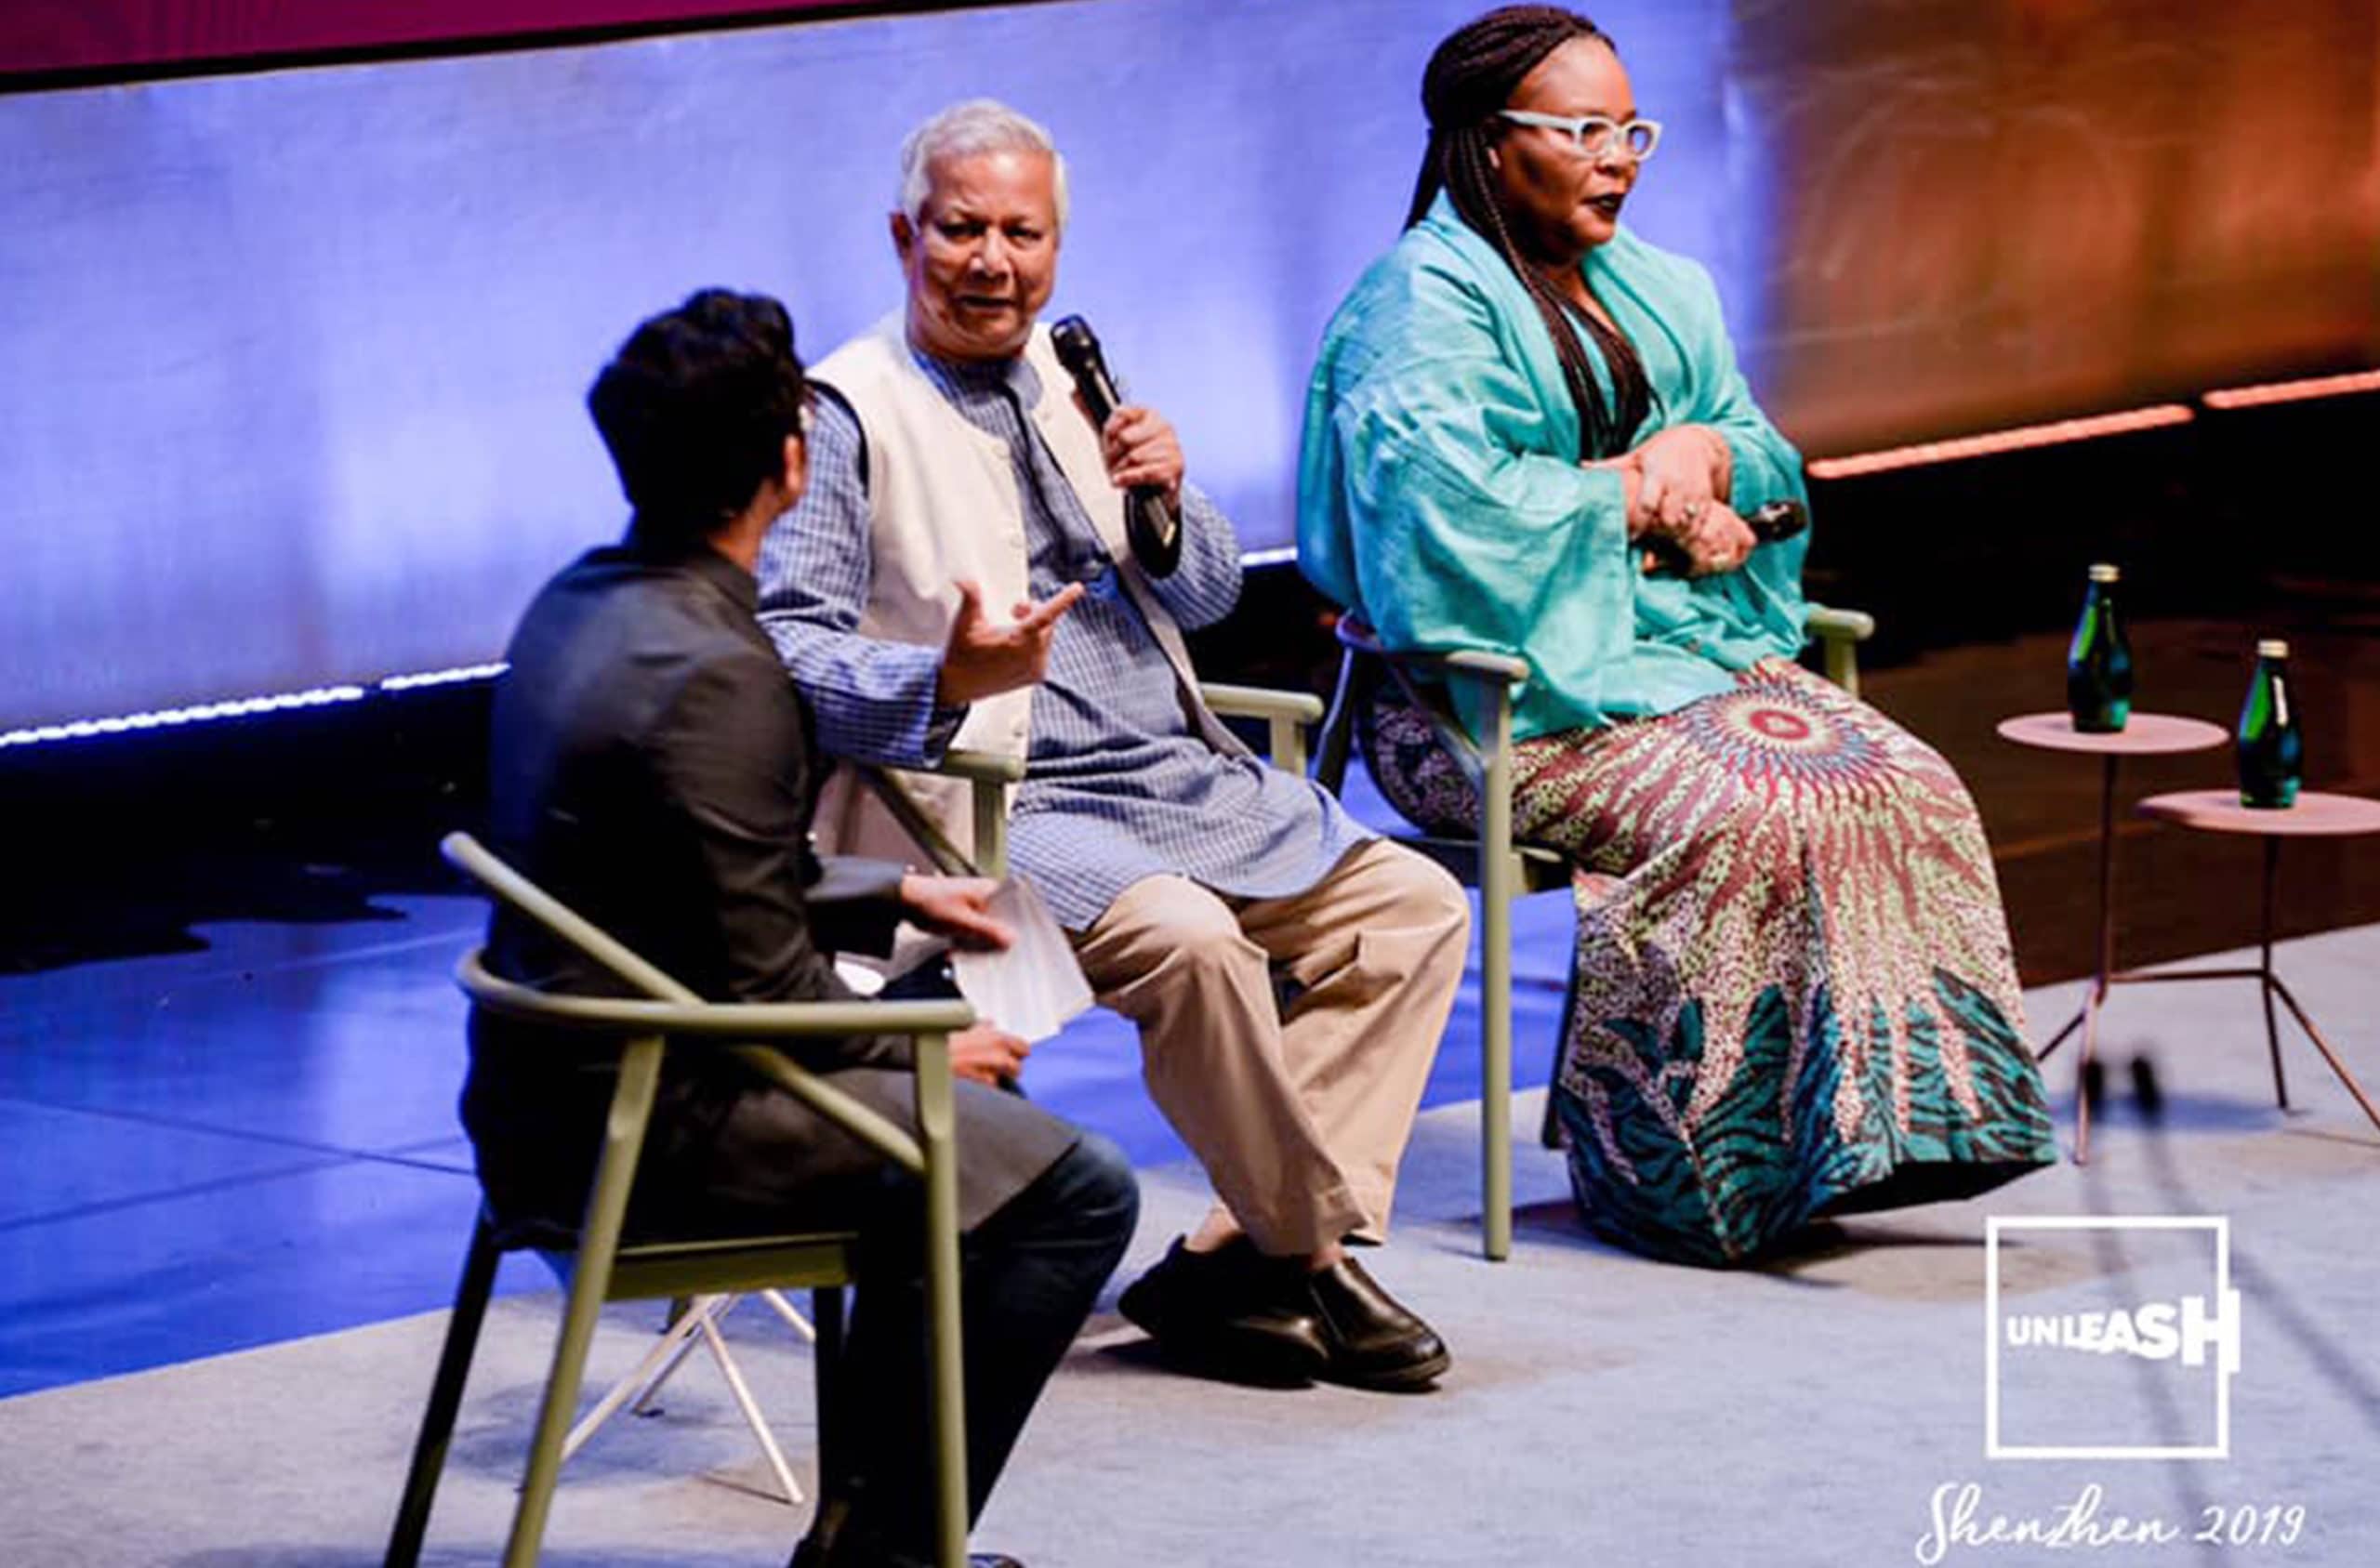 Mohammed Yunus, Bangladesh and Leymah Gbowee, Liberia respectively 2016 and 2011 Nobel Prize winners. Photo: UNLEASH 